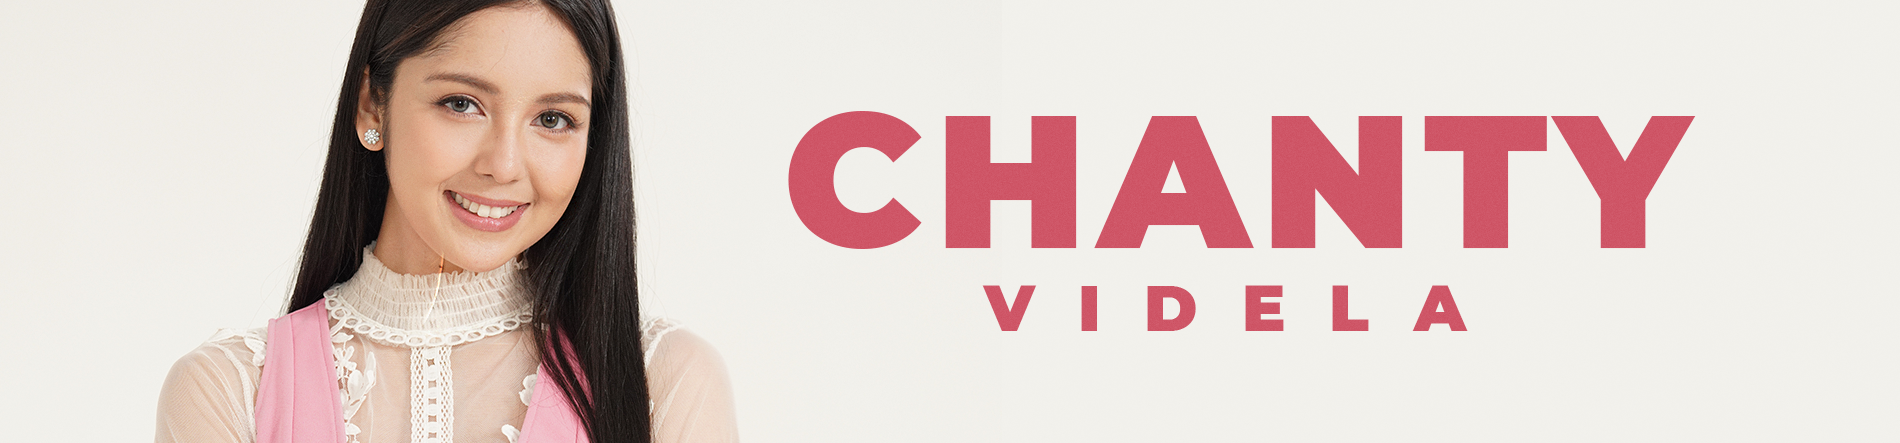 Chanty Videla Desktop Banner